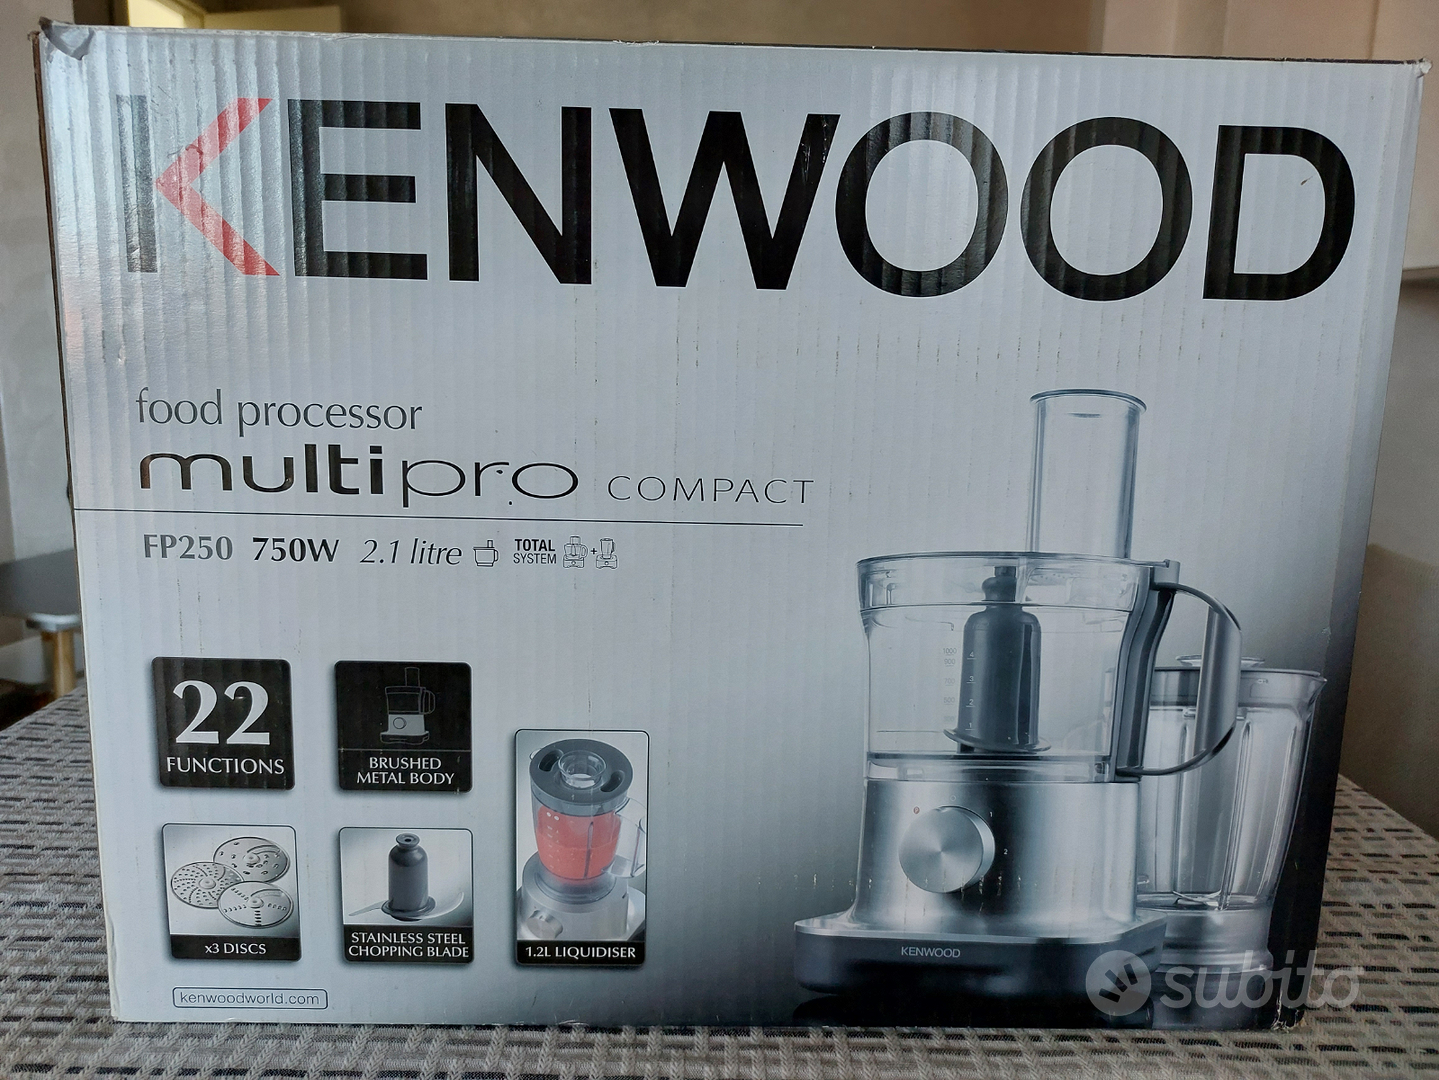 Kenwood multipro compact fp250 - Elettrodomestici In vendita a Torino